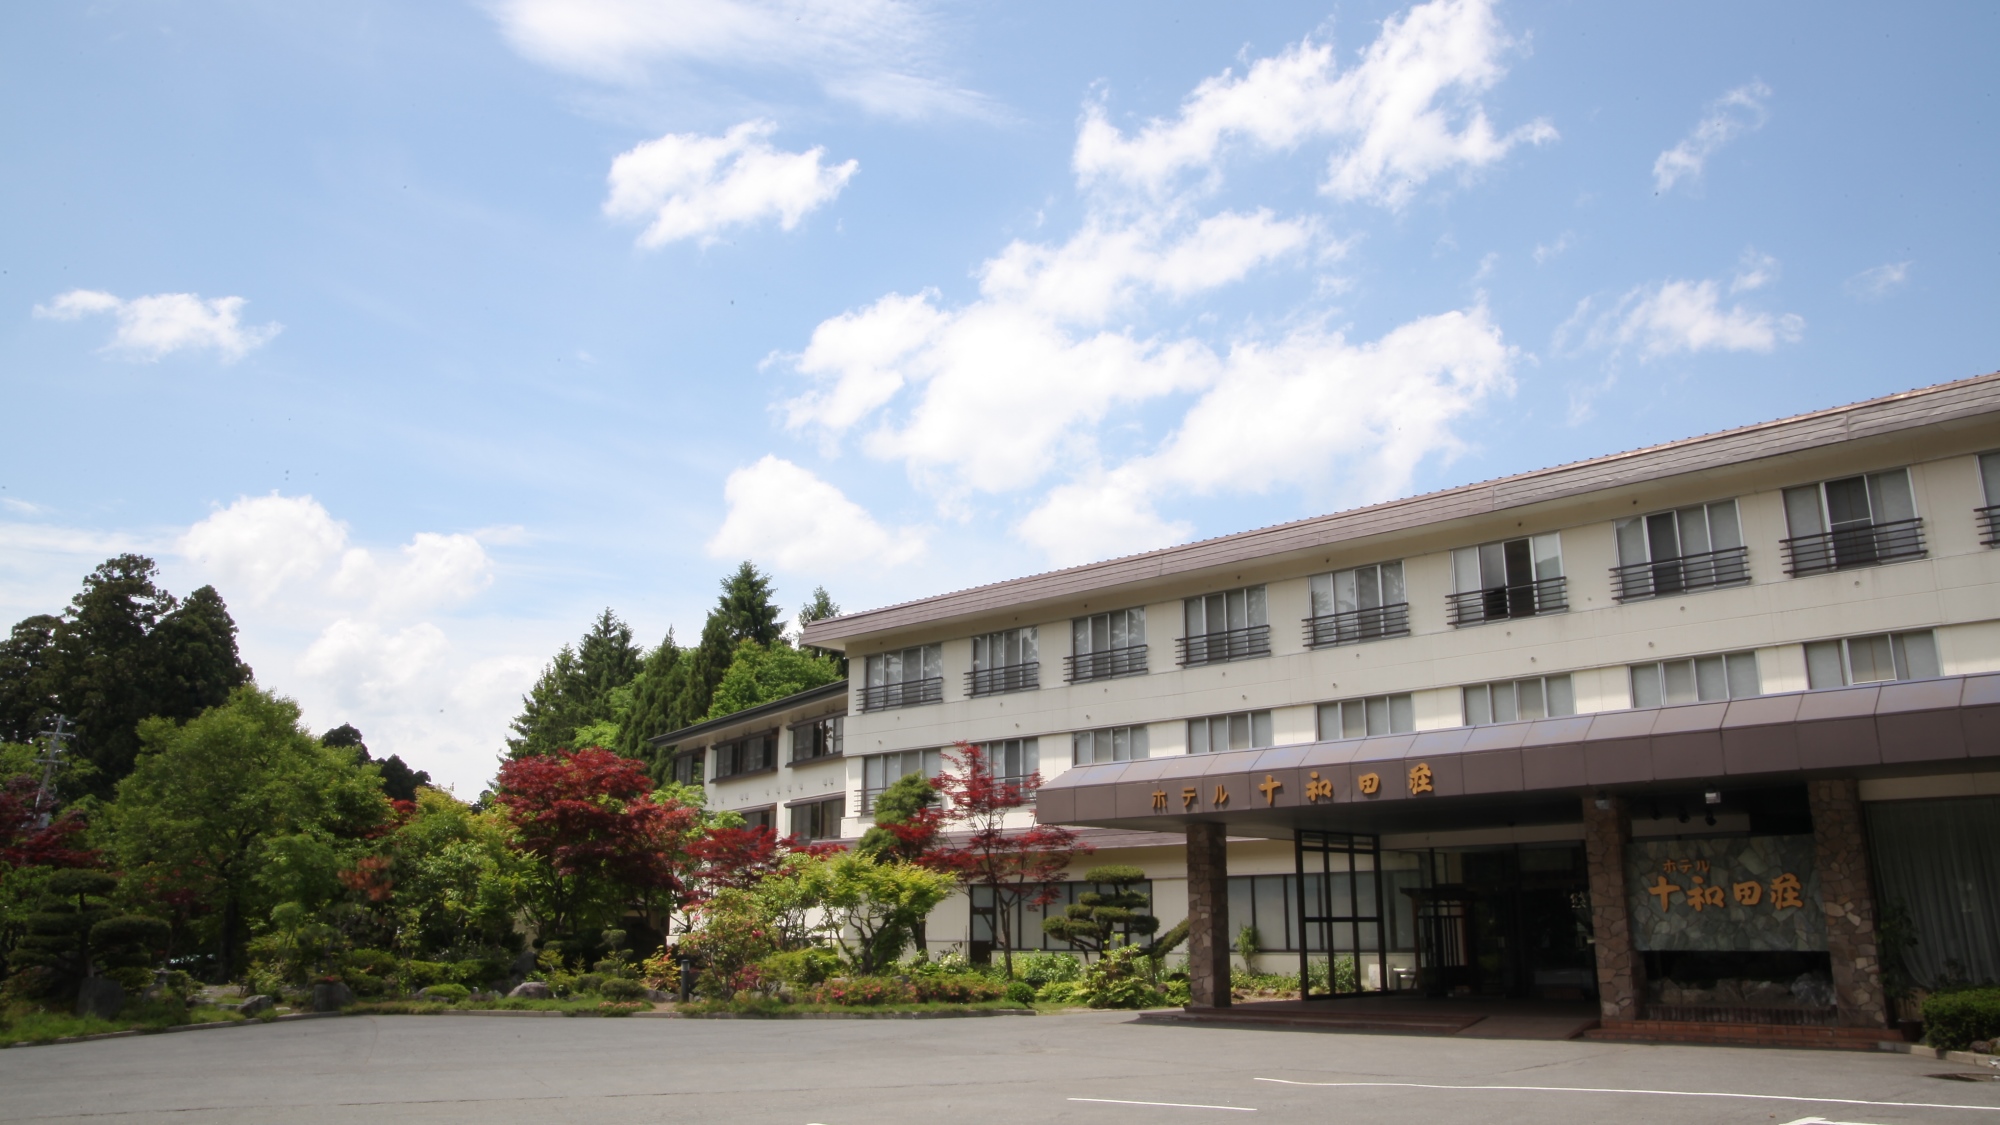 Hotel Towadaso